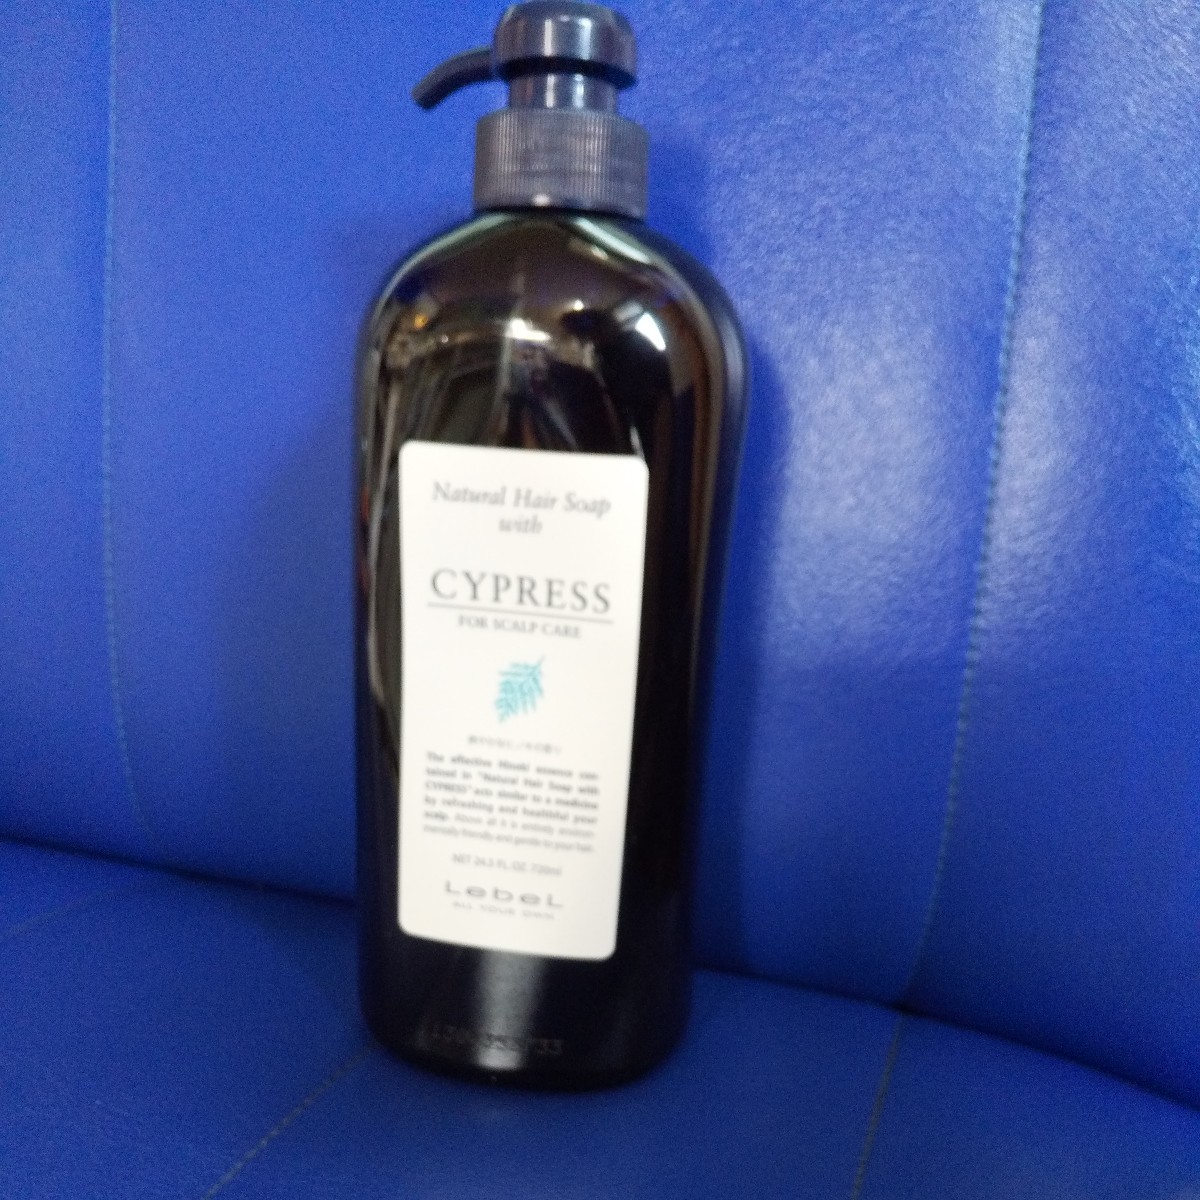 ru bell natural hair soap with CYd pump 720ml×1 piece 